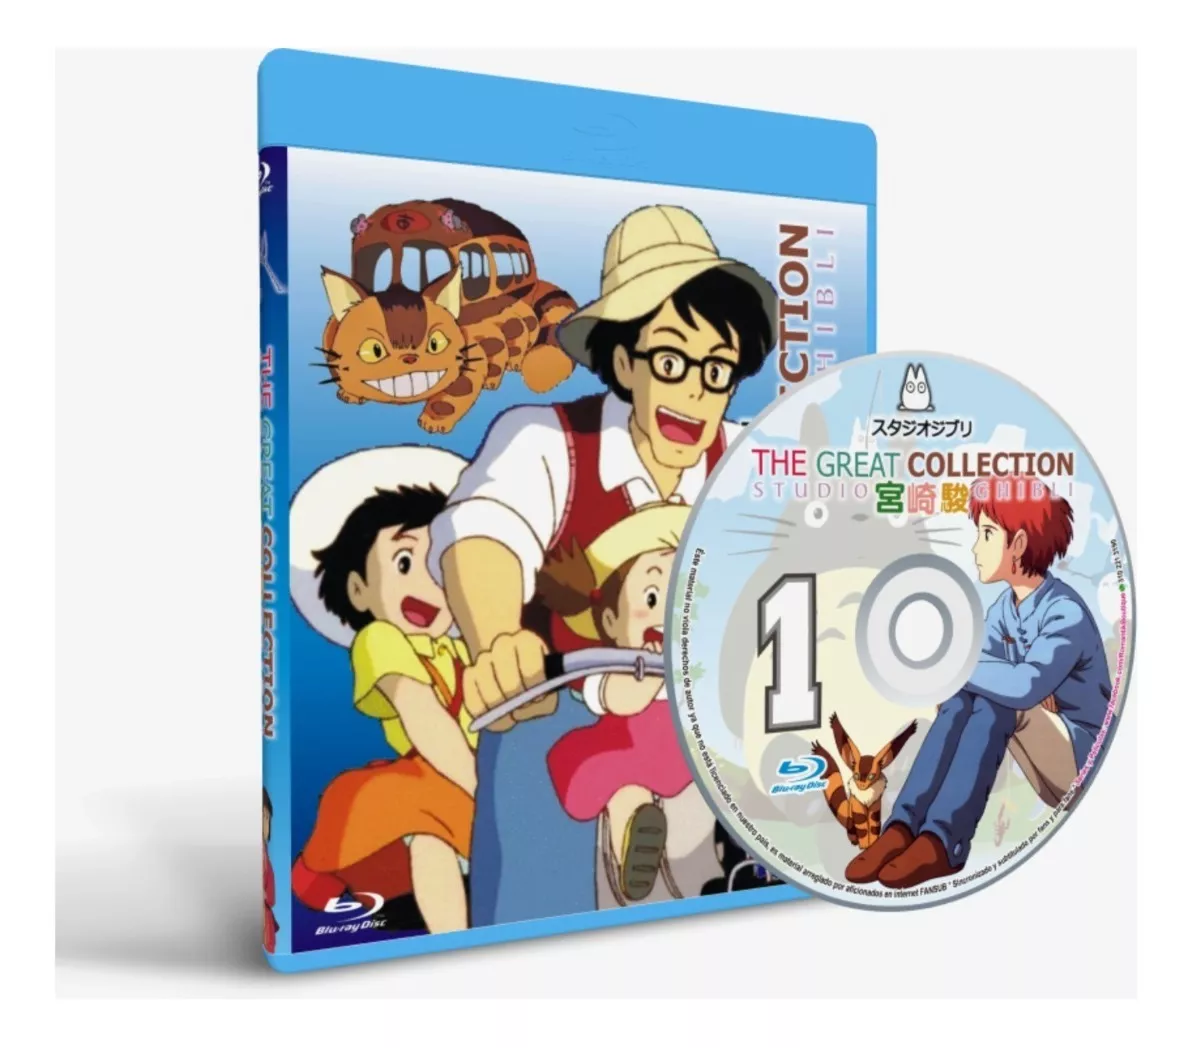  Studio Ghibli Collection Movies Hayao Miyazaki Blu-ray Mkv